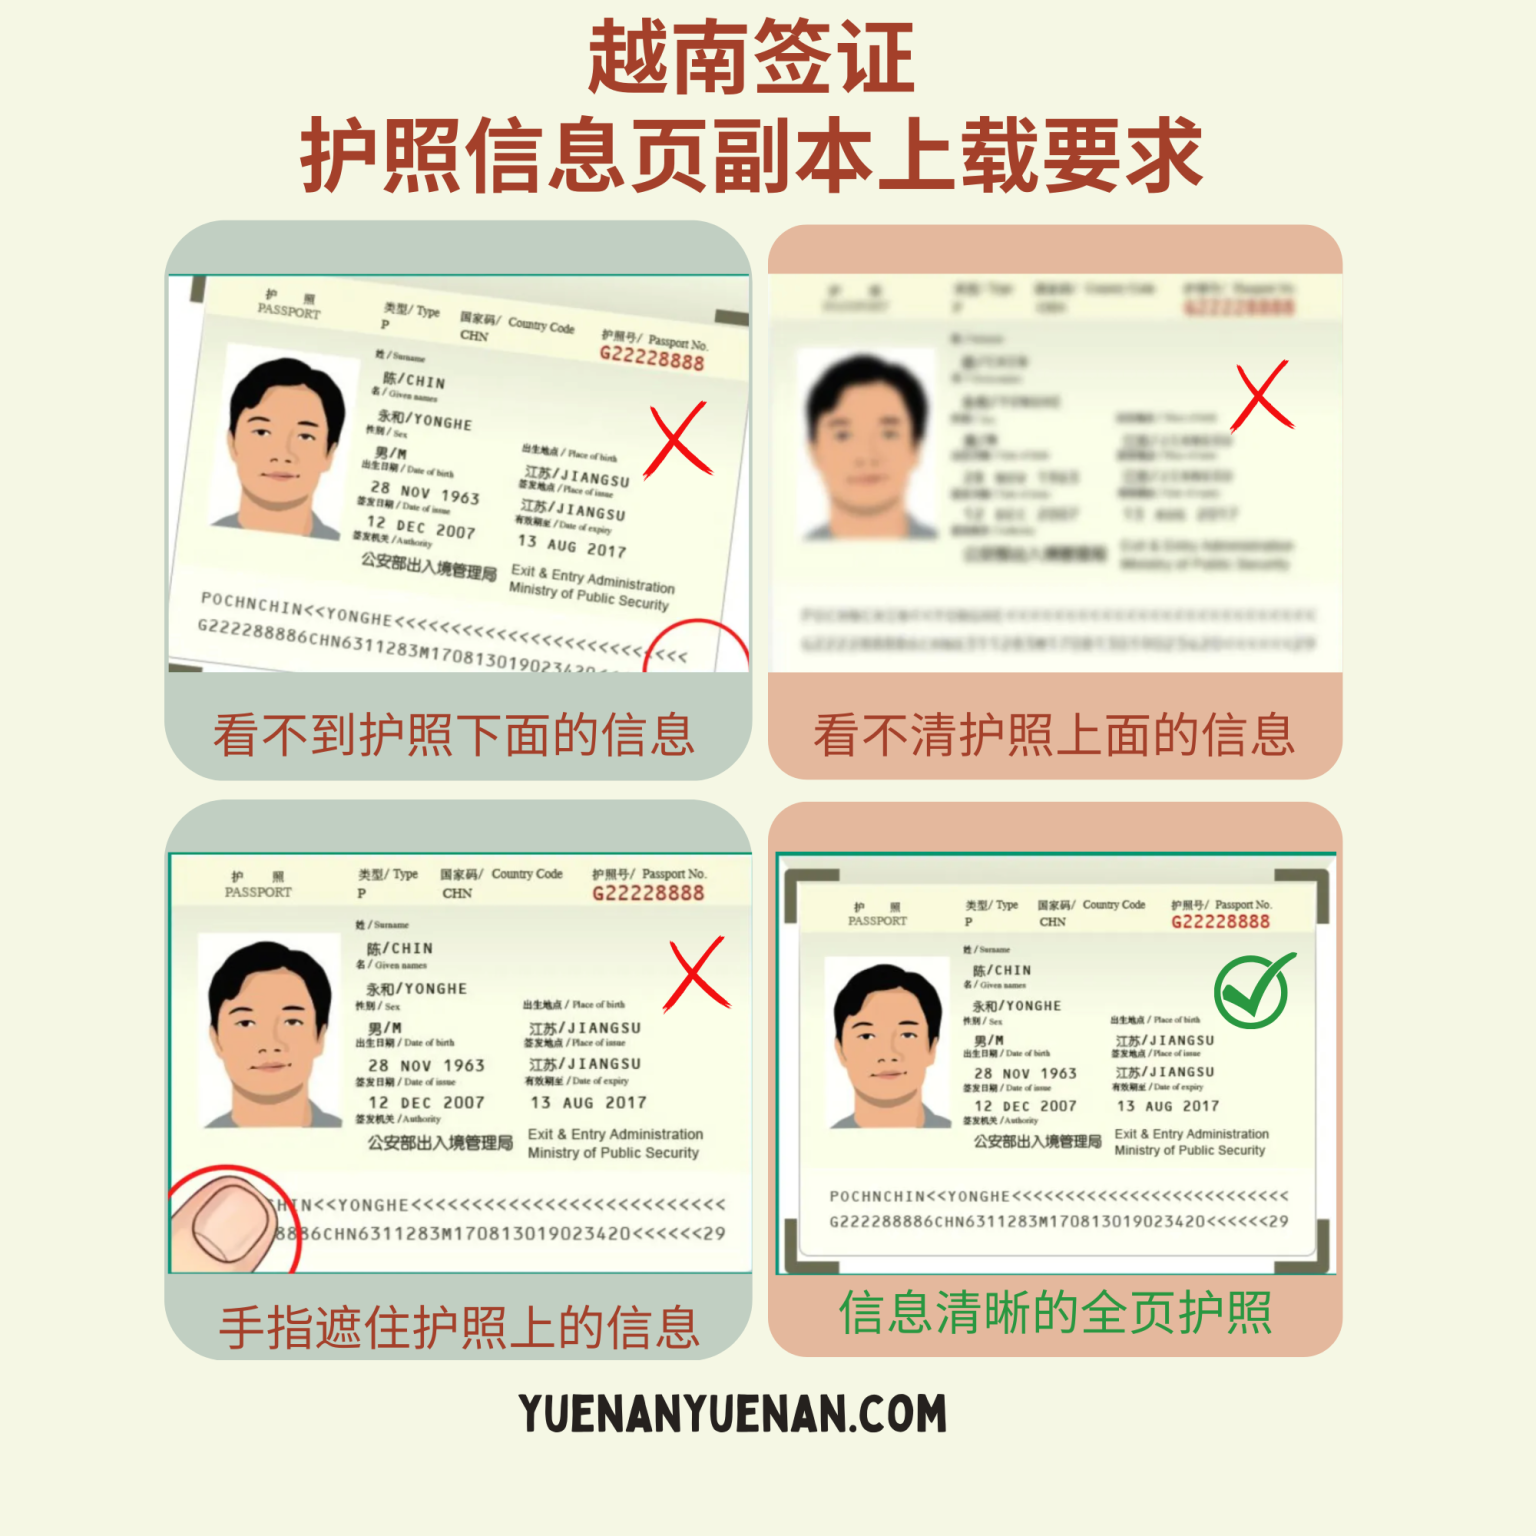 中国人入境越南免签吗？ | Vietnamimmigration.com official website | e-visa & Visa ...